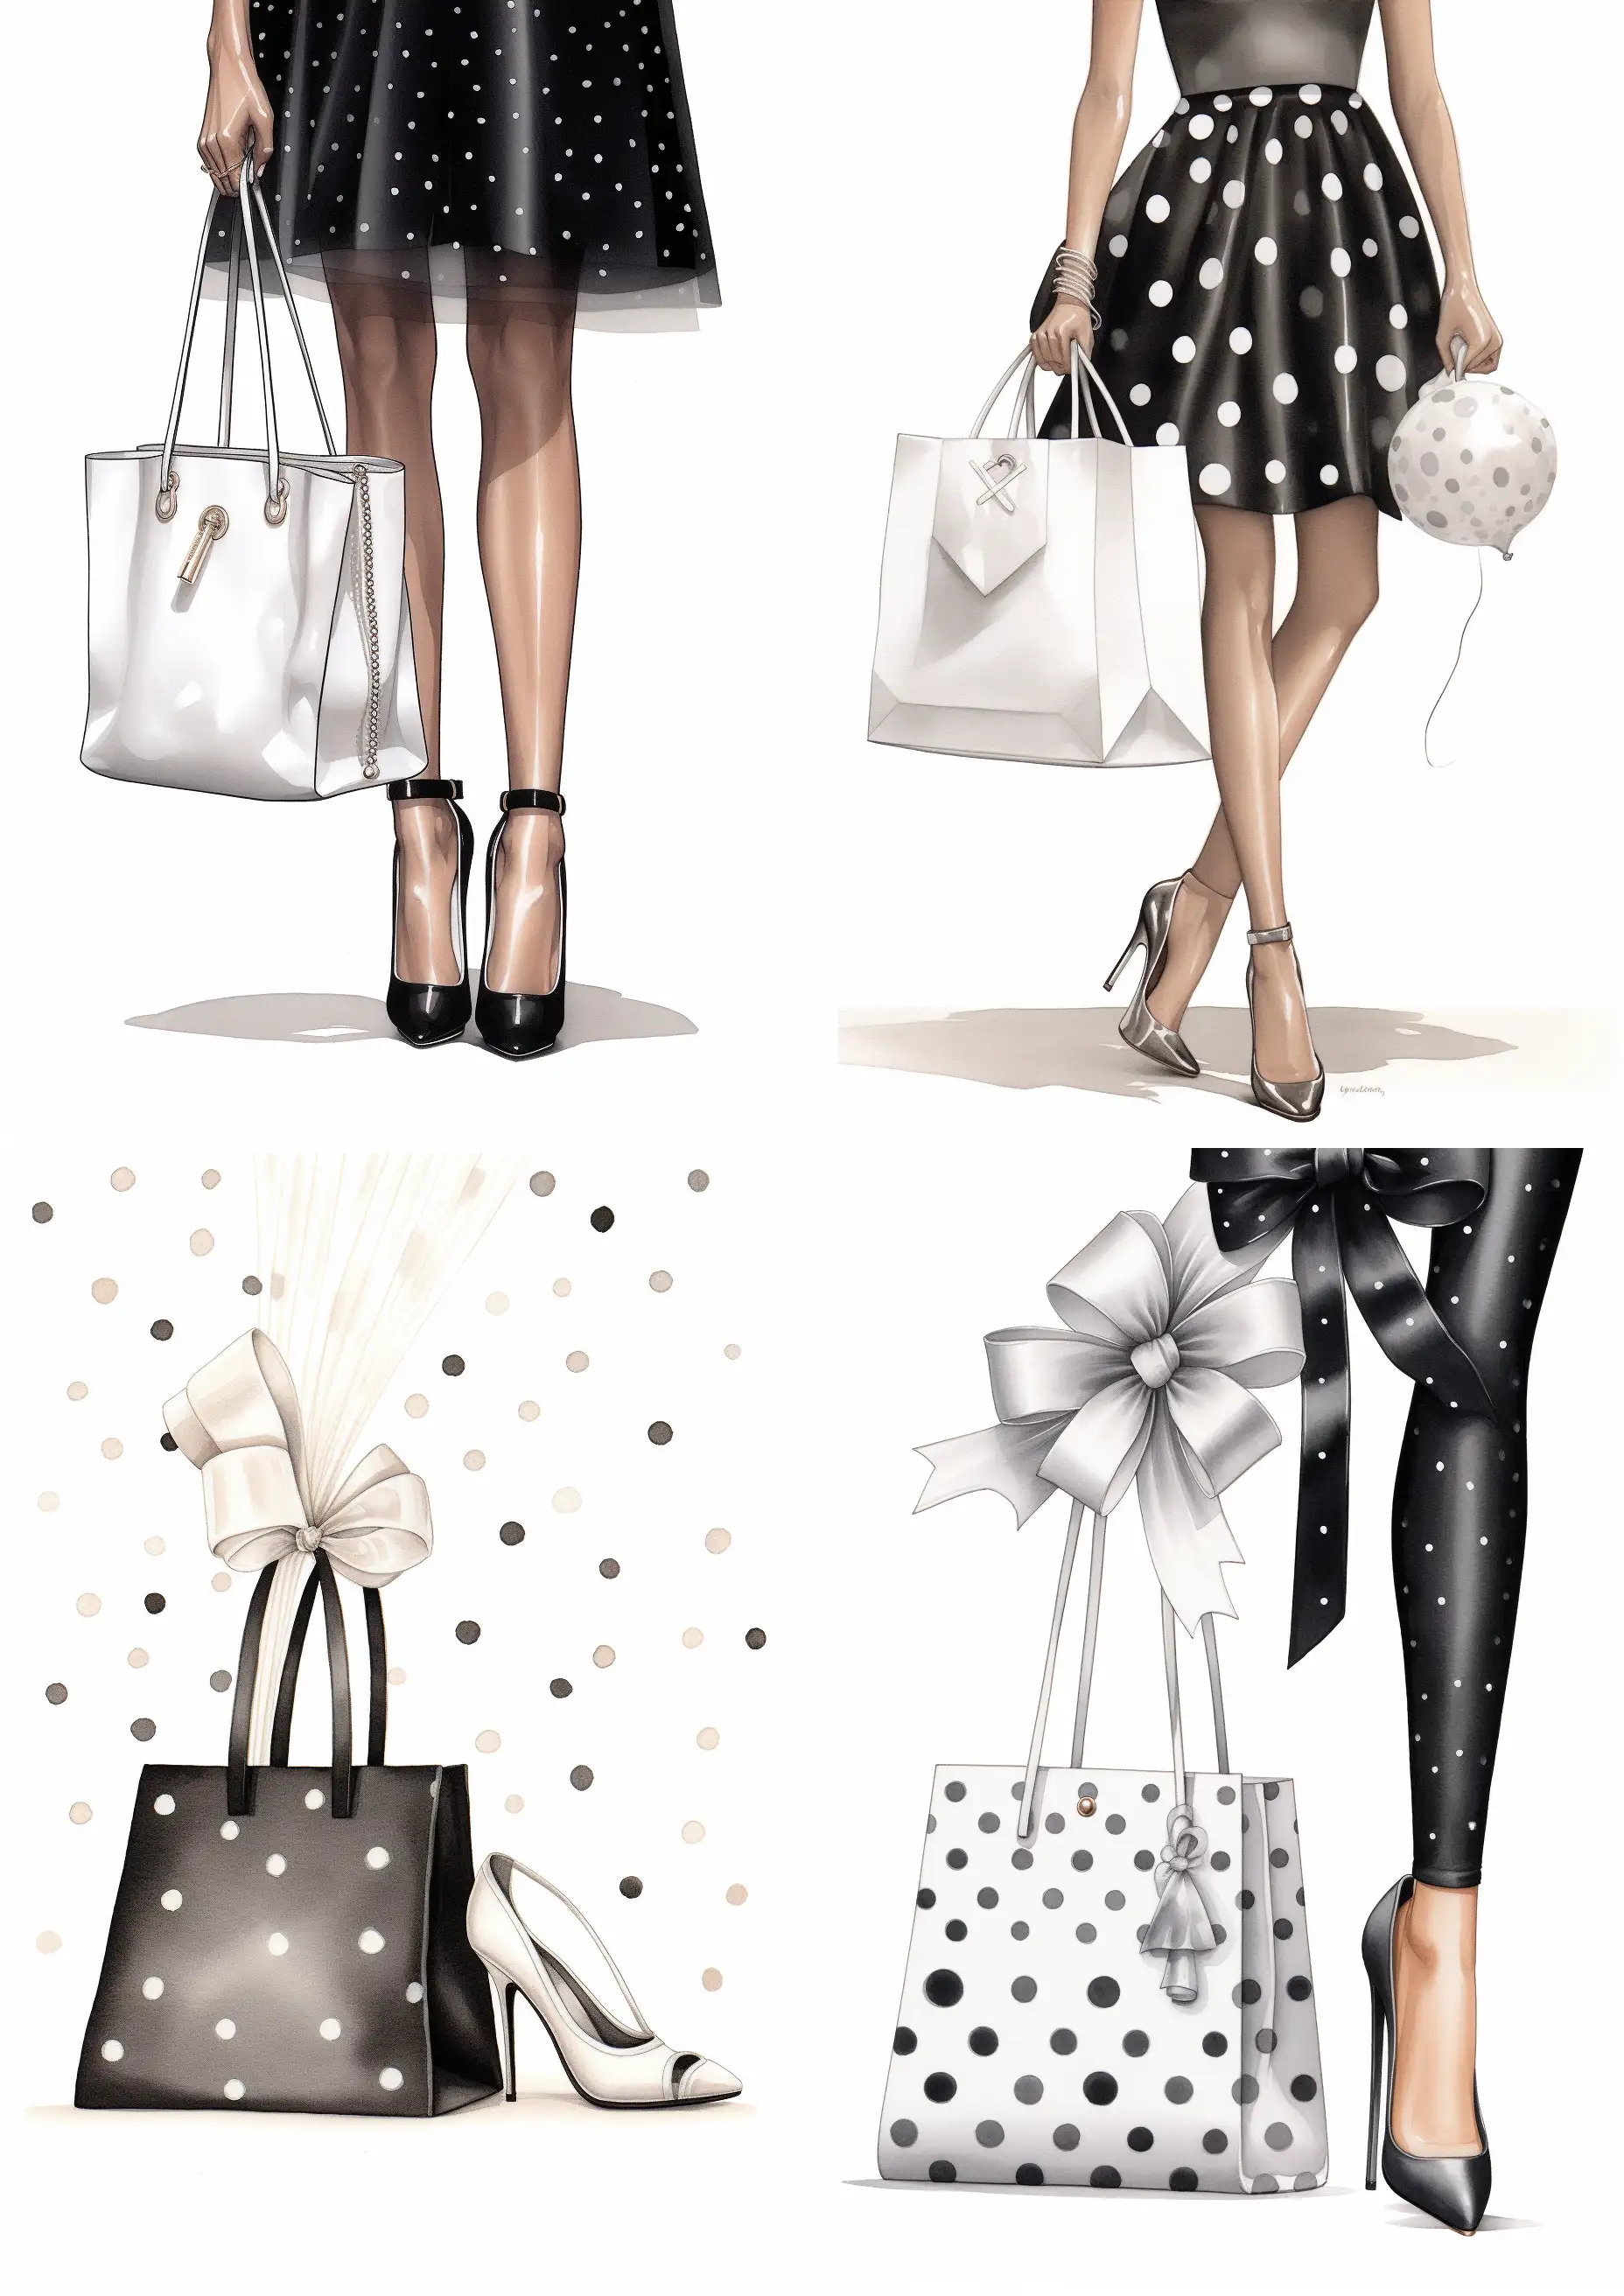 Chic-Valentino-Fashion-Illustration-with-Polka-Dot-Tulle-Skirt-and-Elegant-Black-Heels